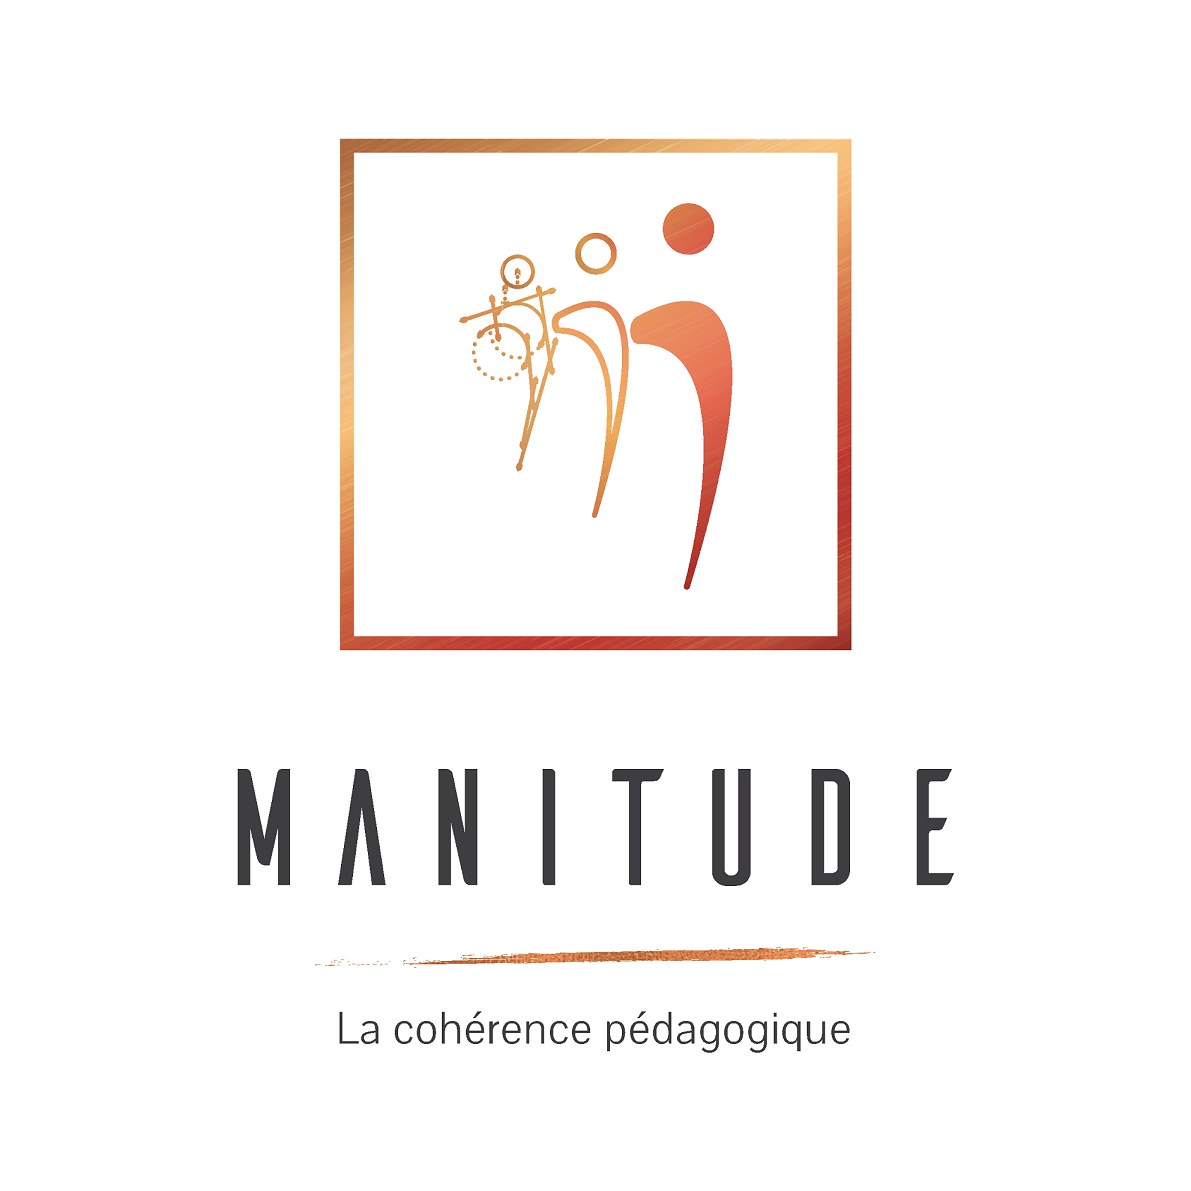 Manitude